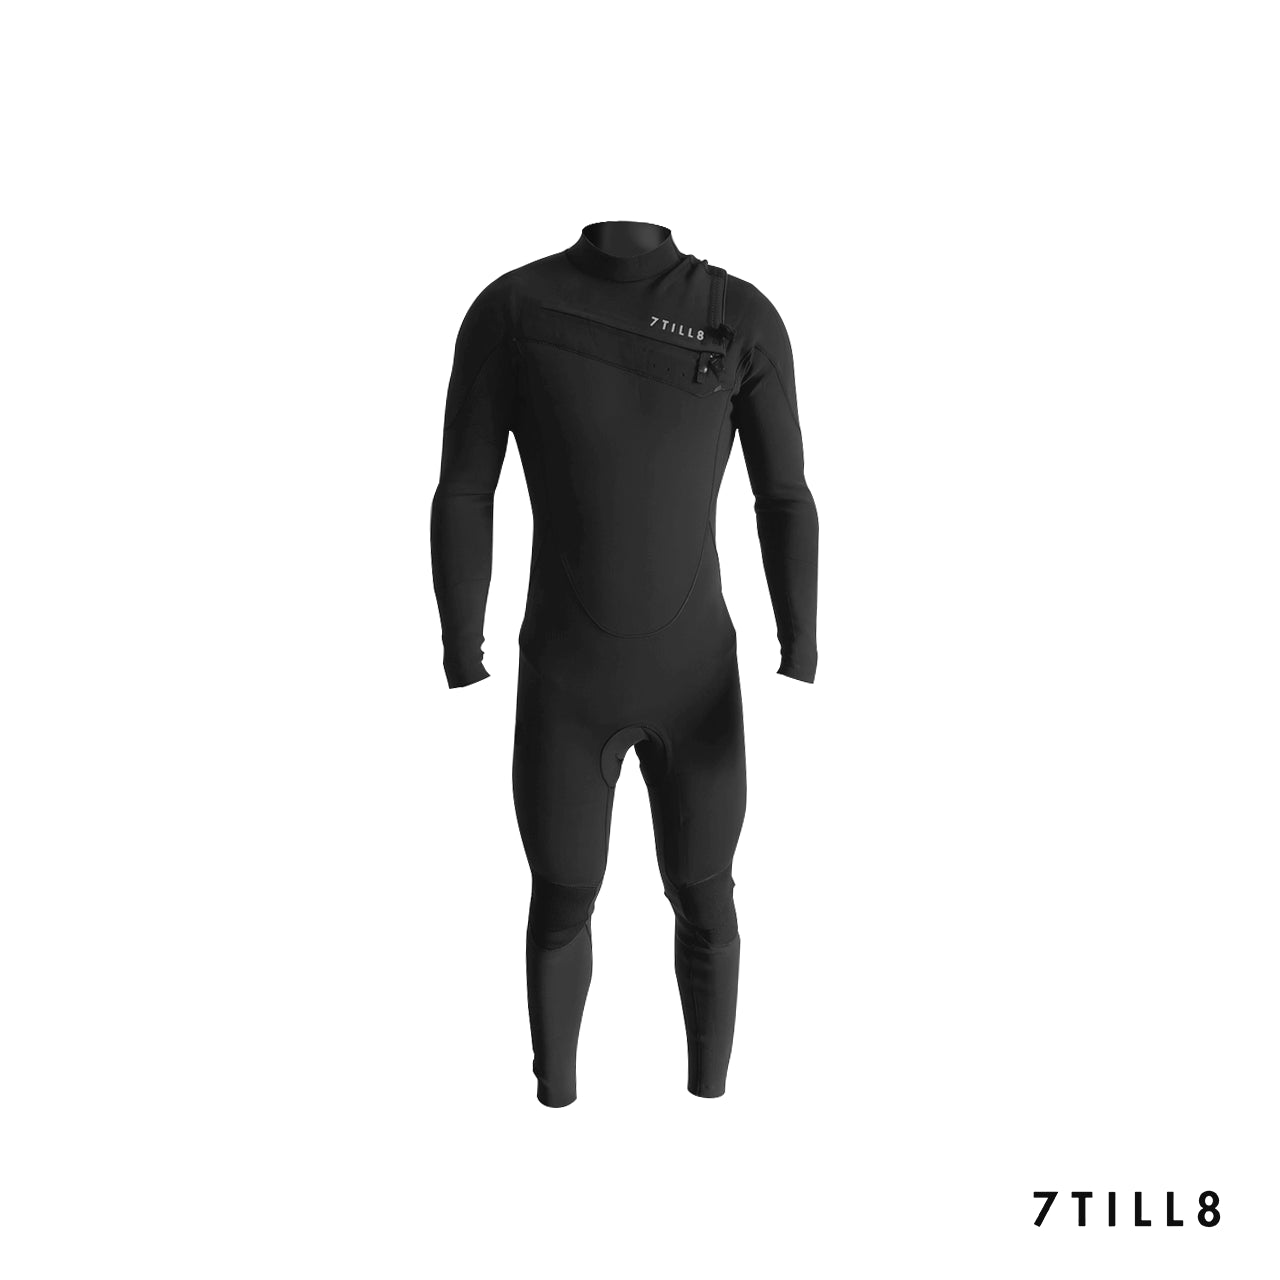 7TILL8 - Combinaison 4-3 MM - Front Zip - Fullsuit Black